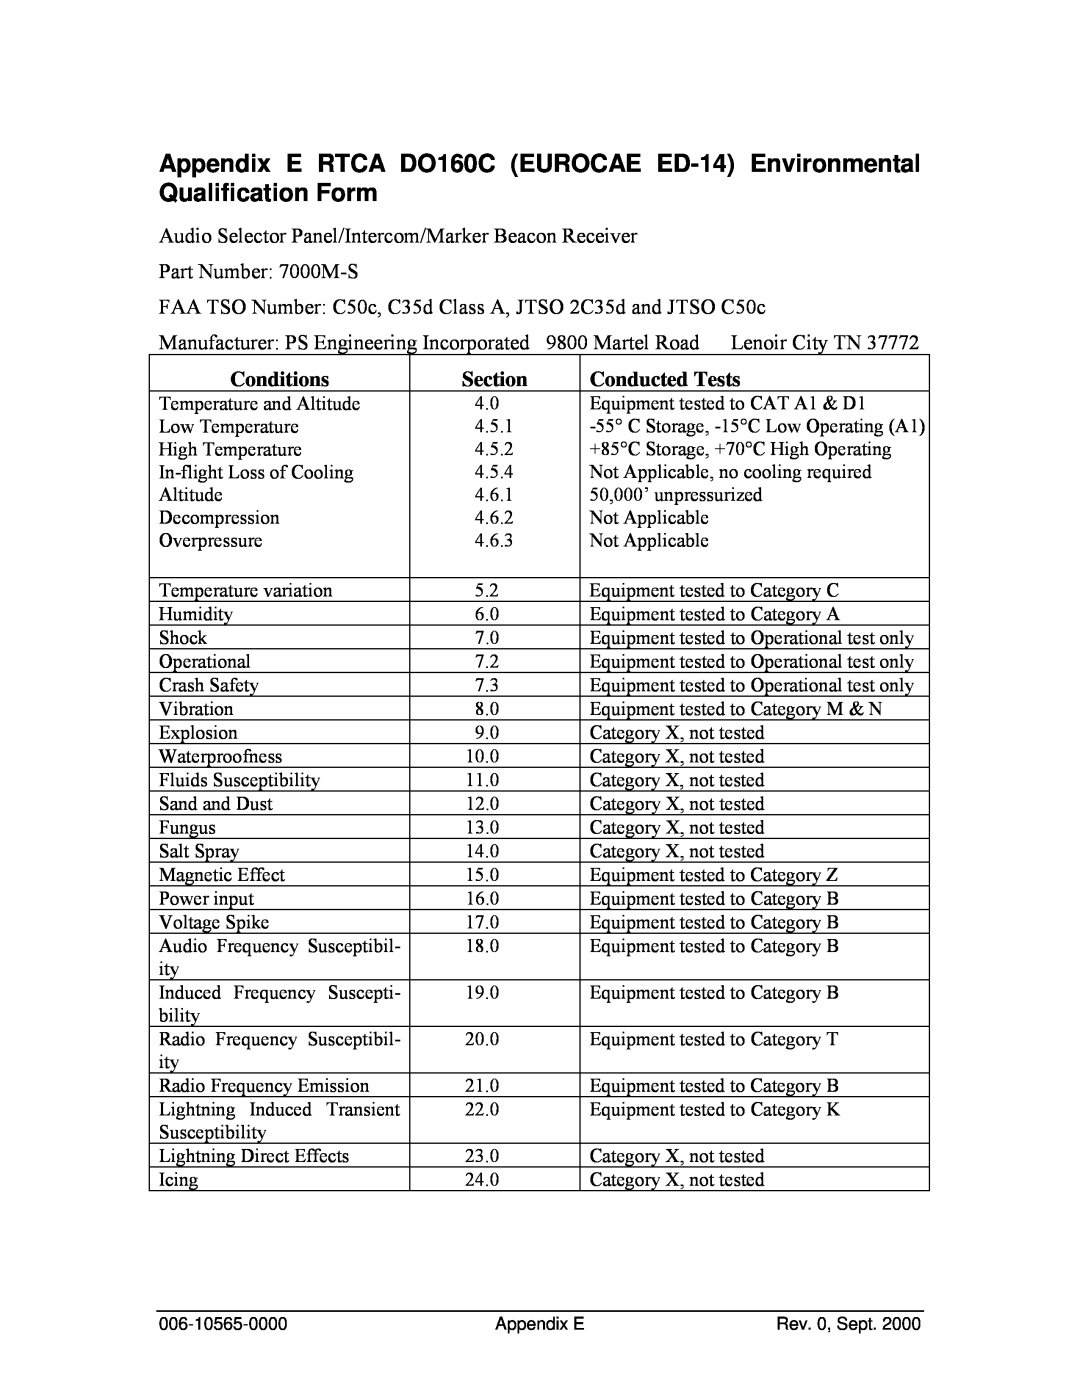 Honeywell KMA28 operation manual Appendix E RTCA DO160C EUROCAE ED-14 Environmental Qualification Form, Conditions, Section 